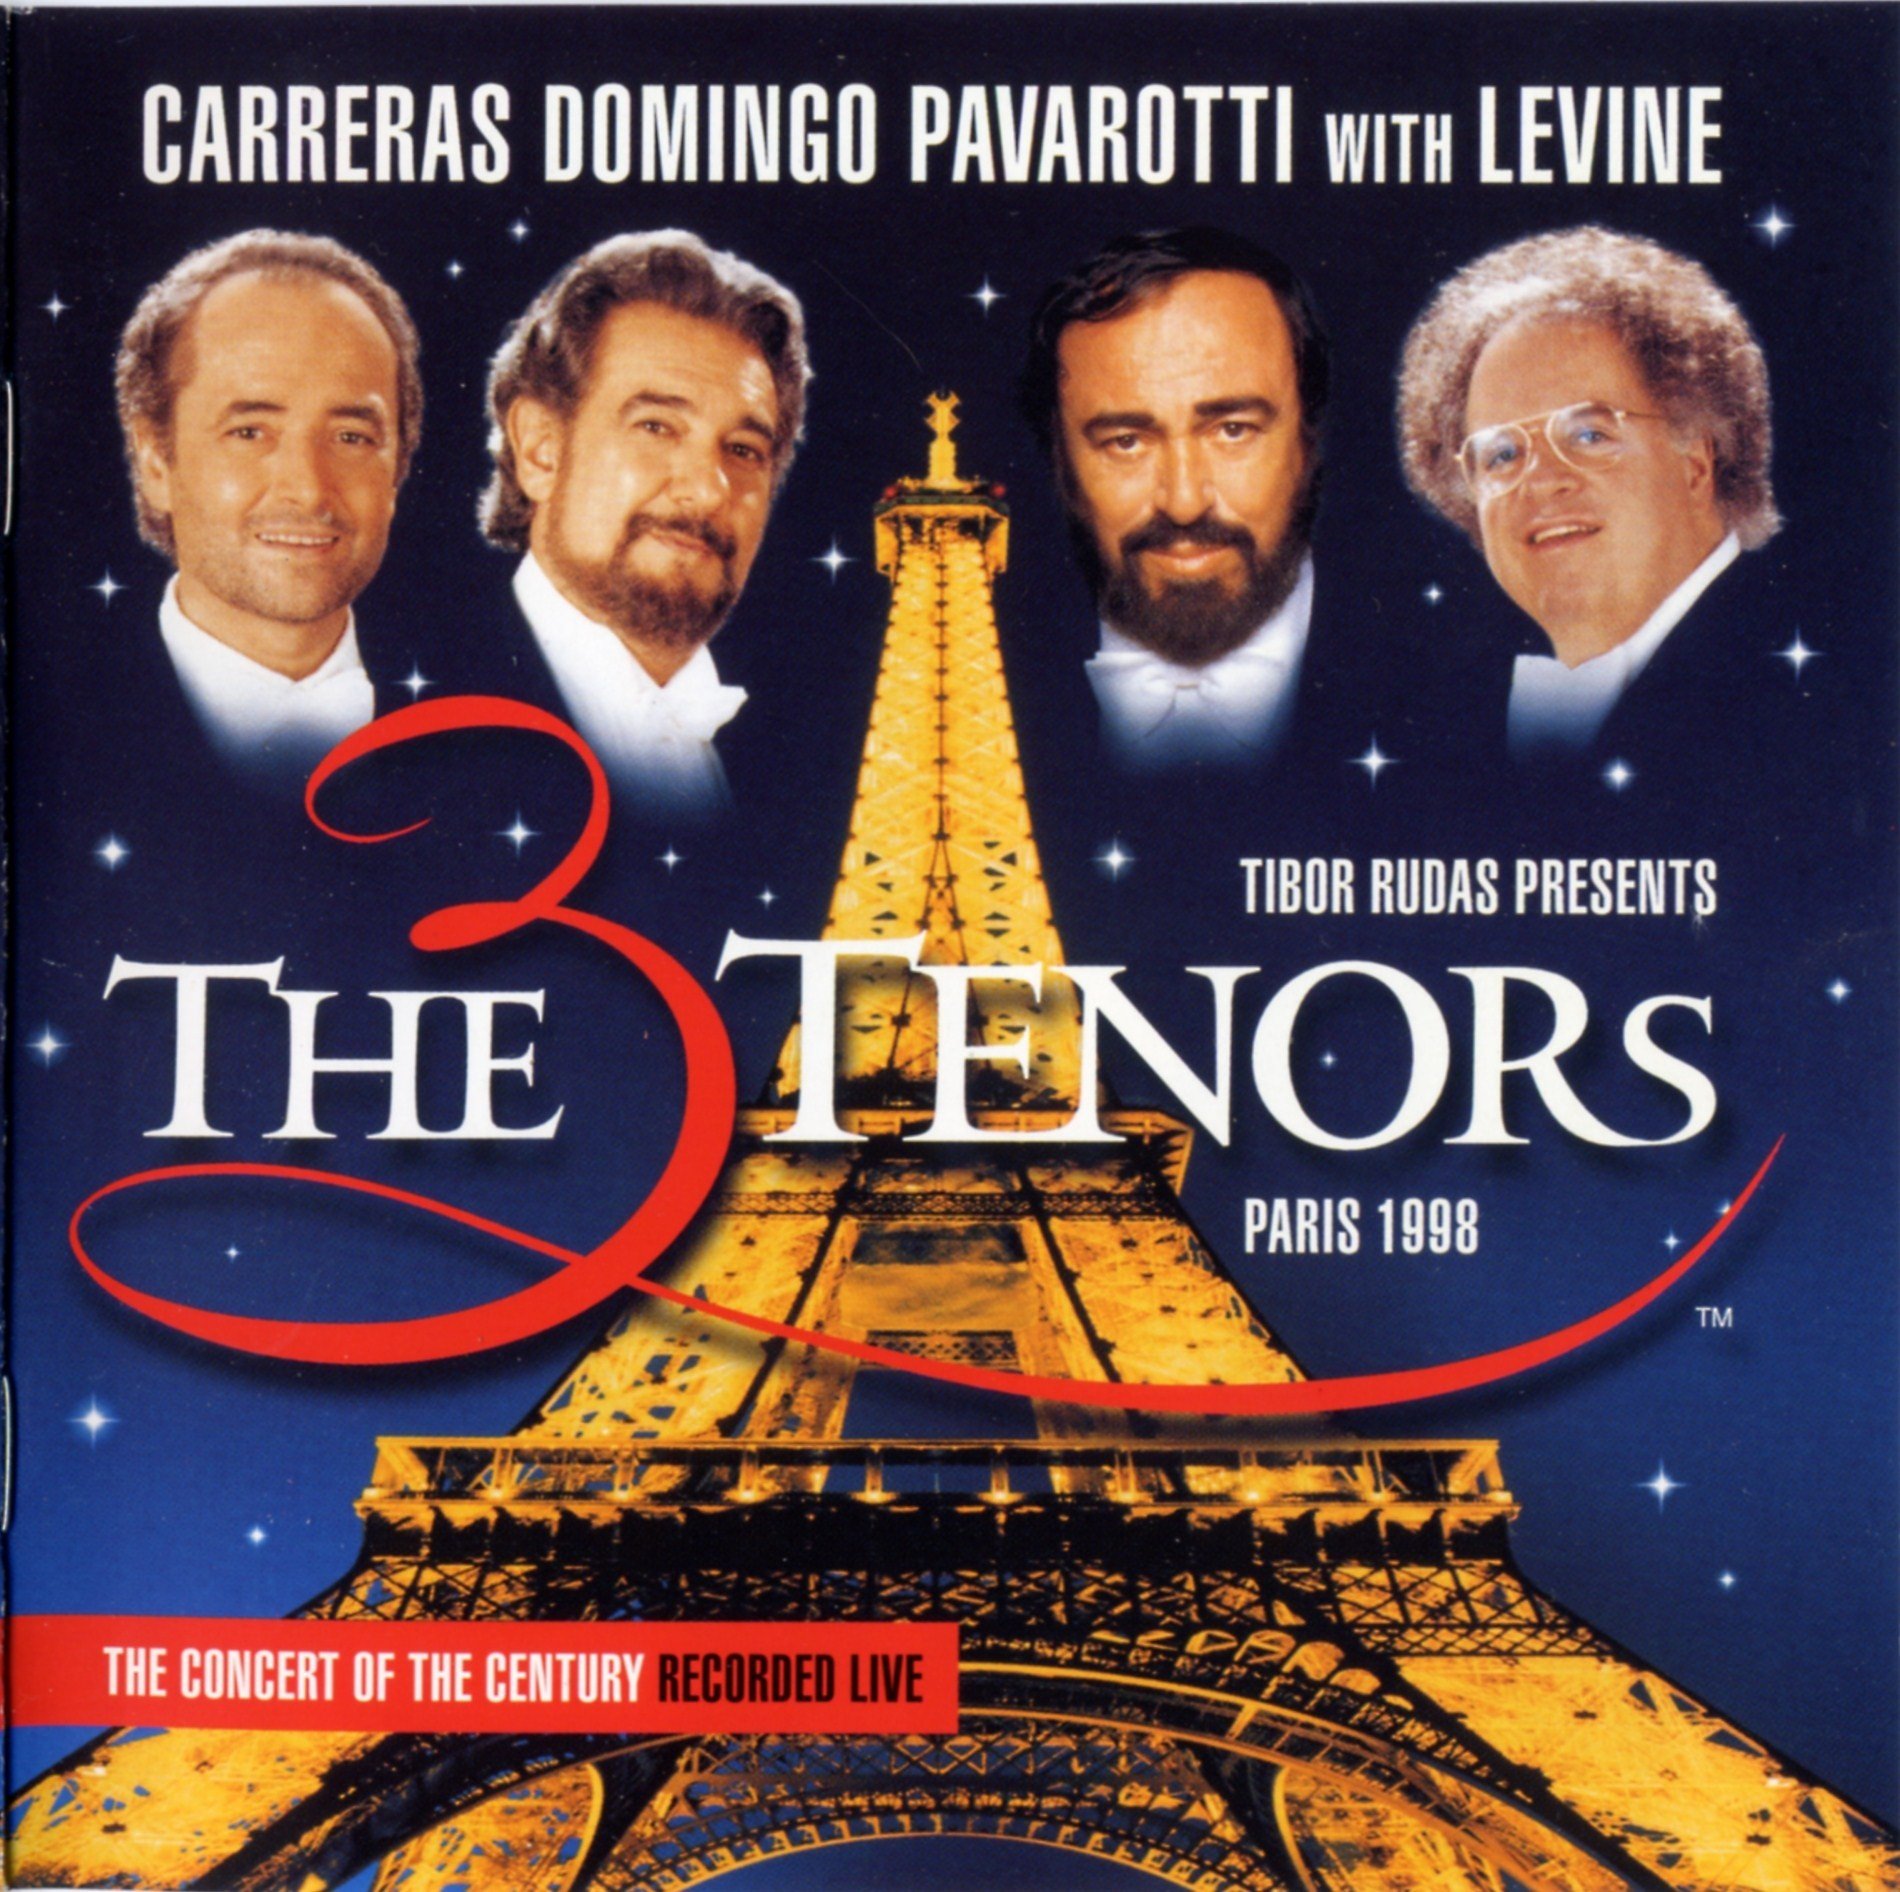 the 3 tenors tour